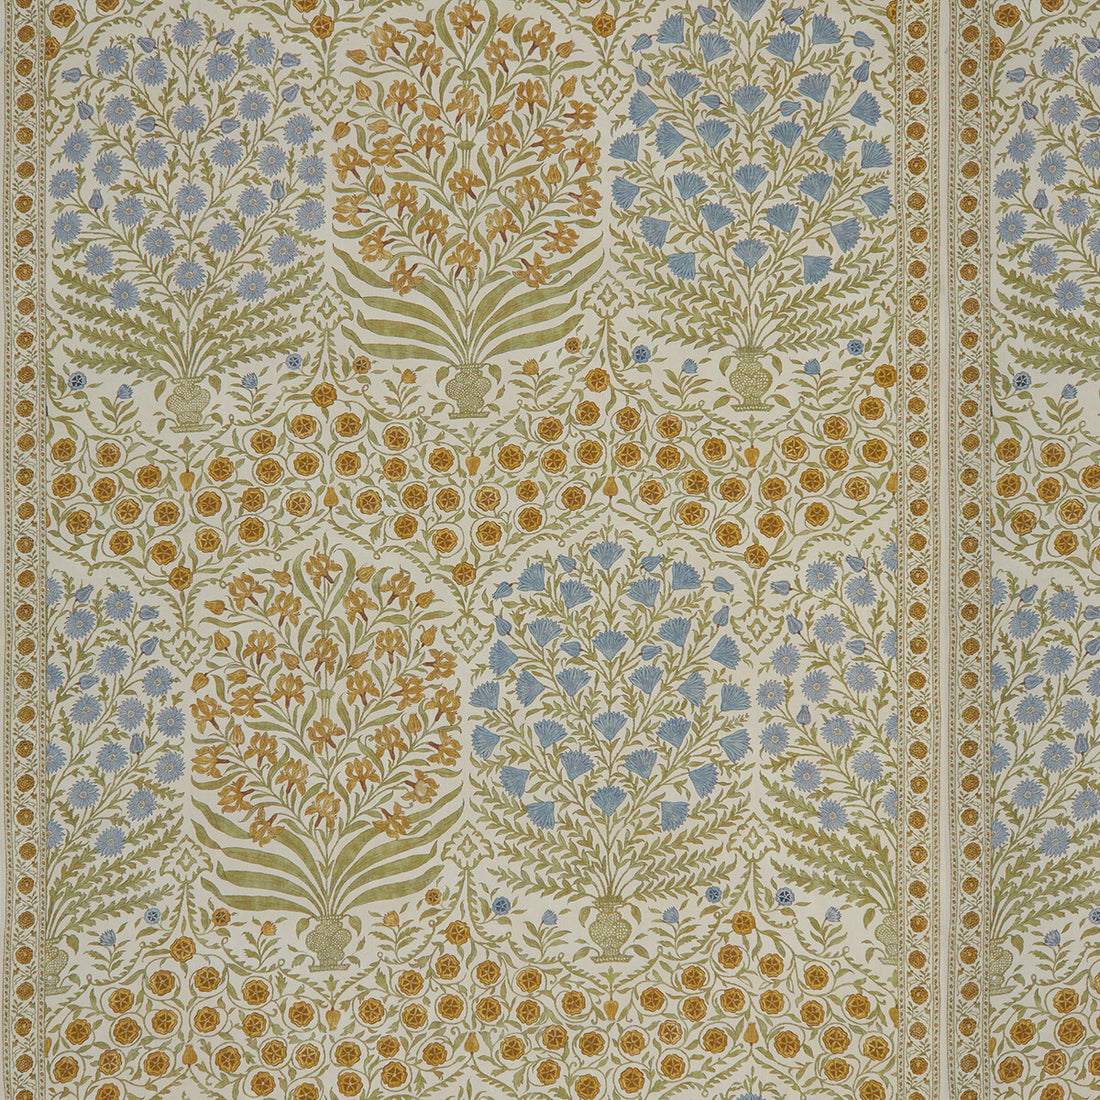 Sameera fabric in sapphire/gold color - pattern 2017108.540.0 - by Lee Jofa in the Oscar De La Renta III collection